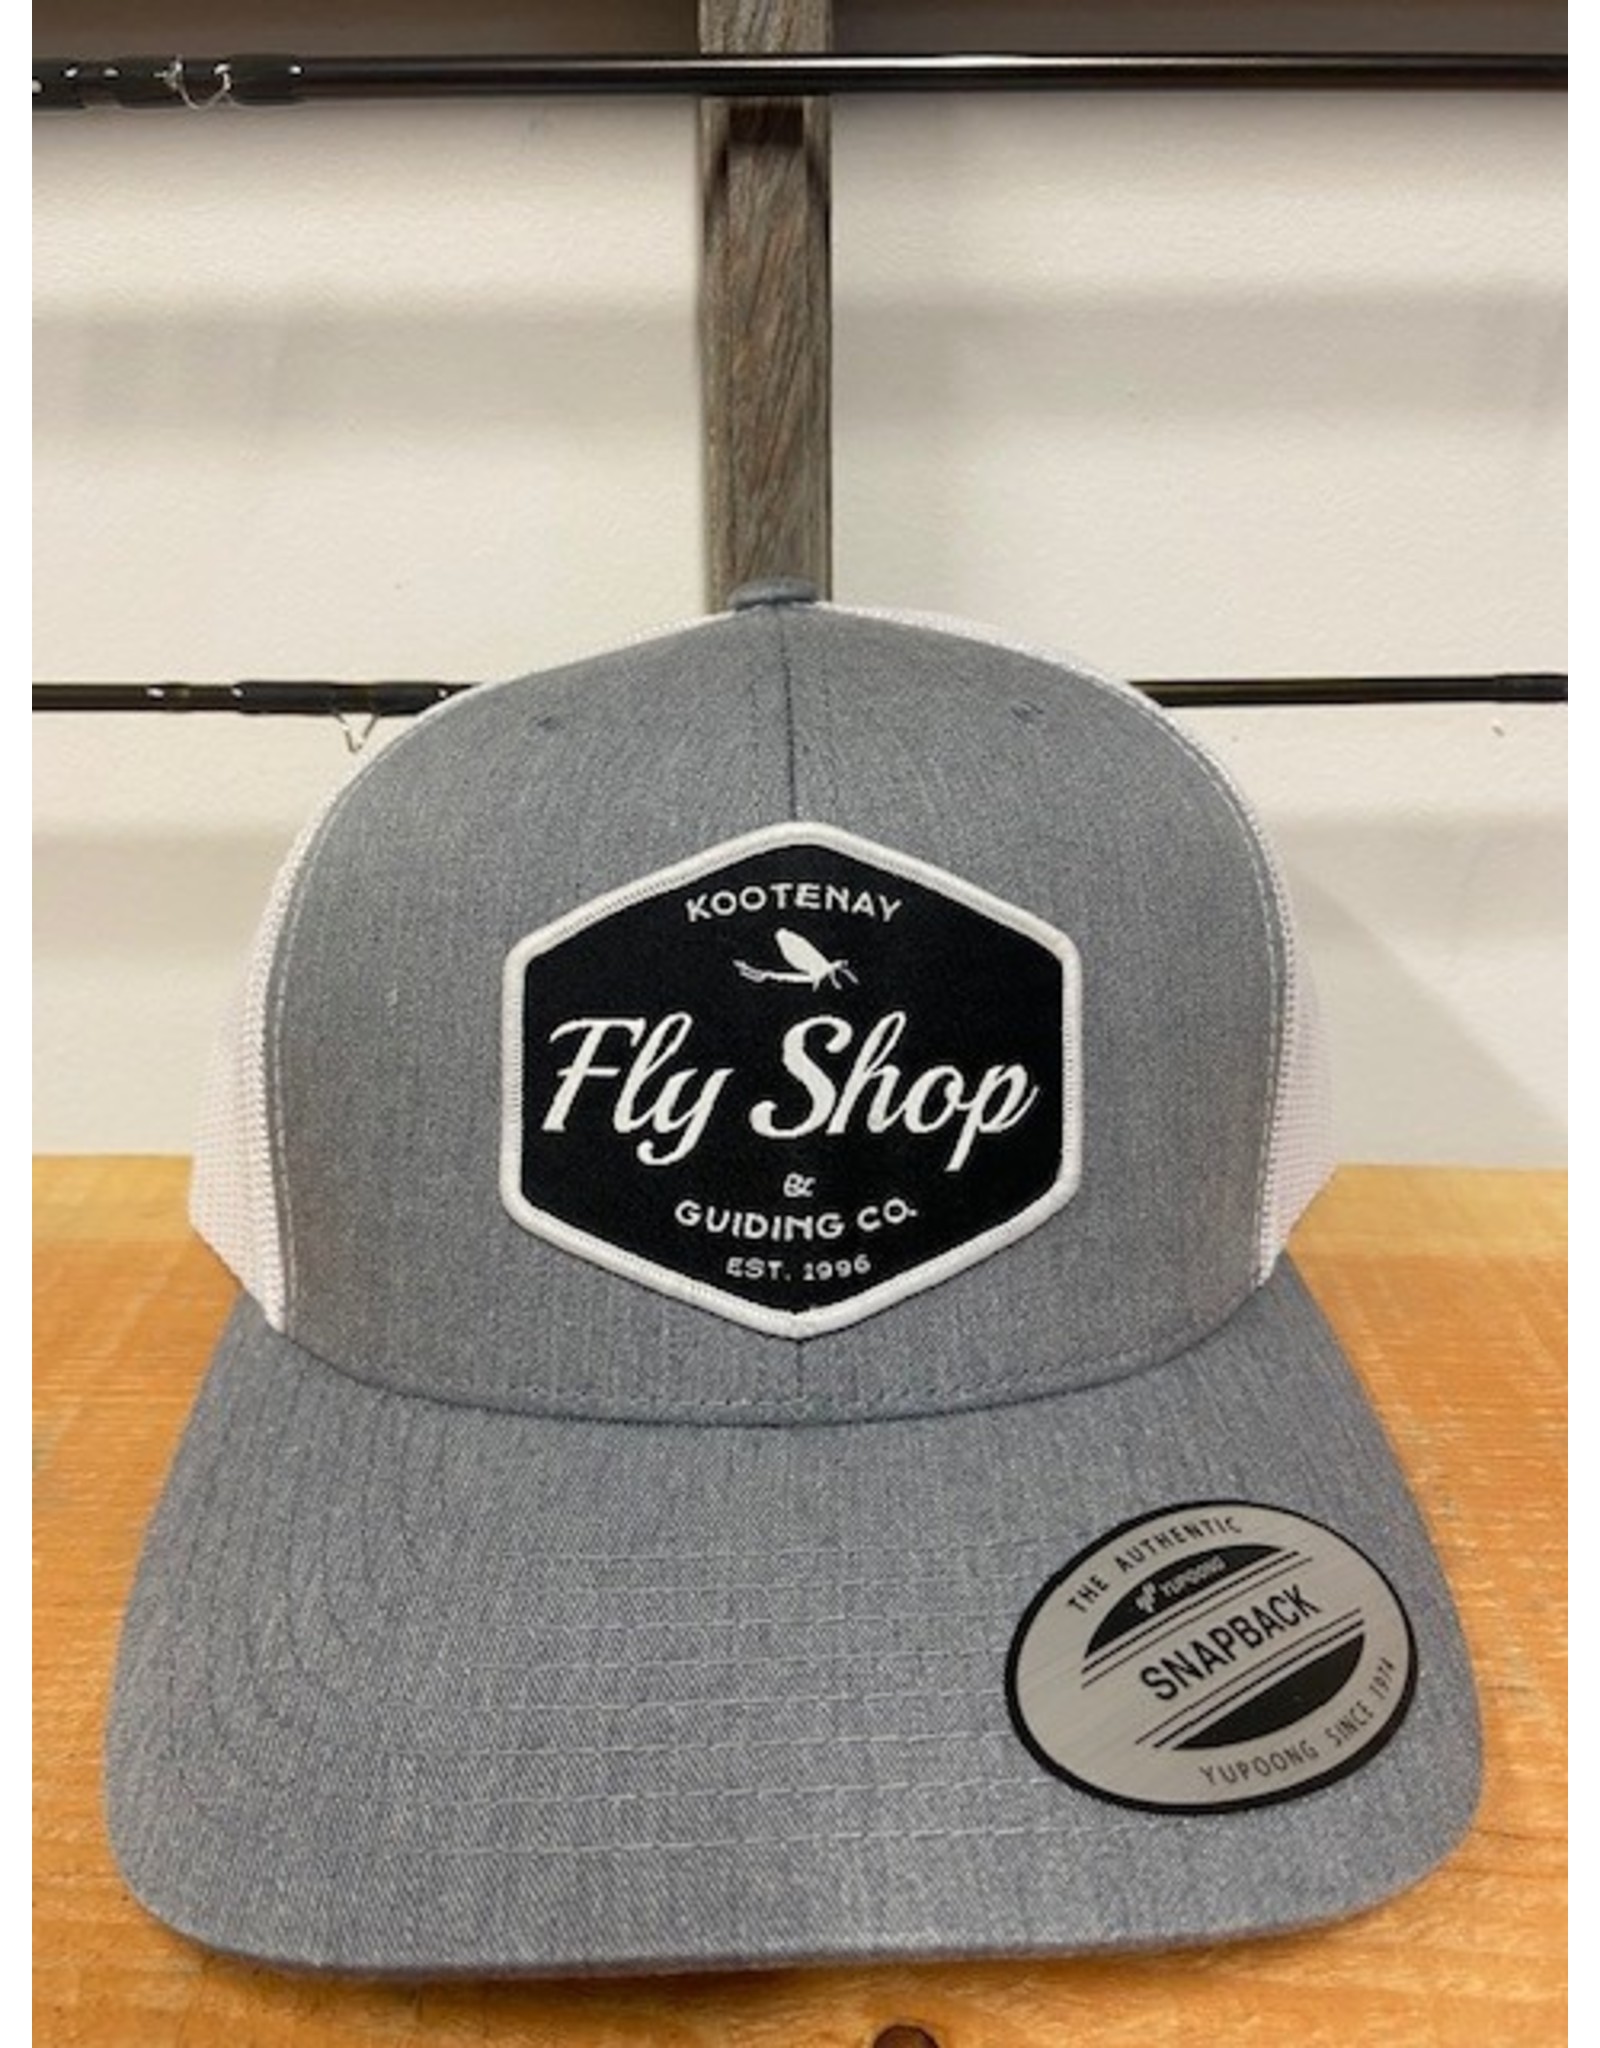 FLEXFIT Retro Trucker Hat